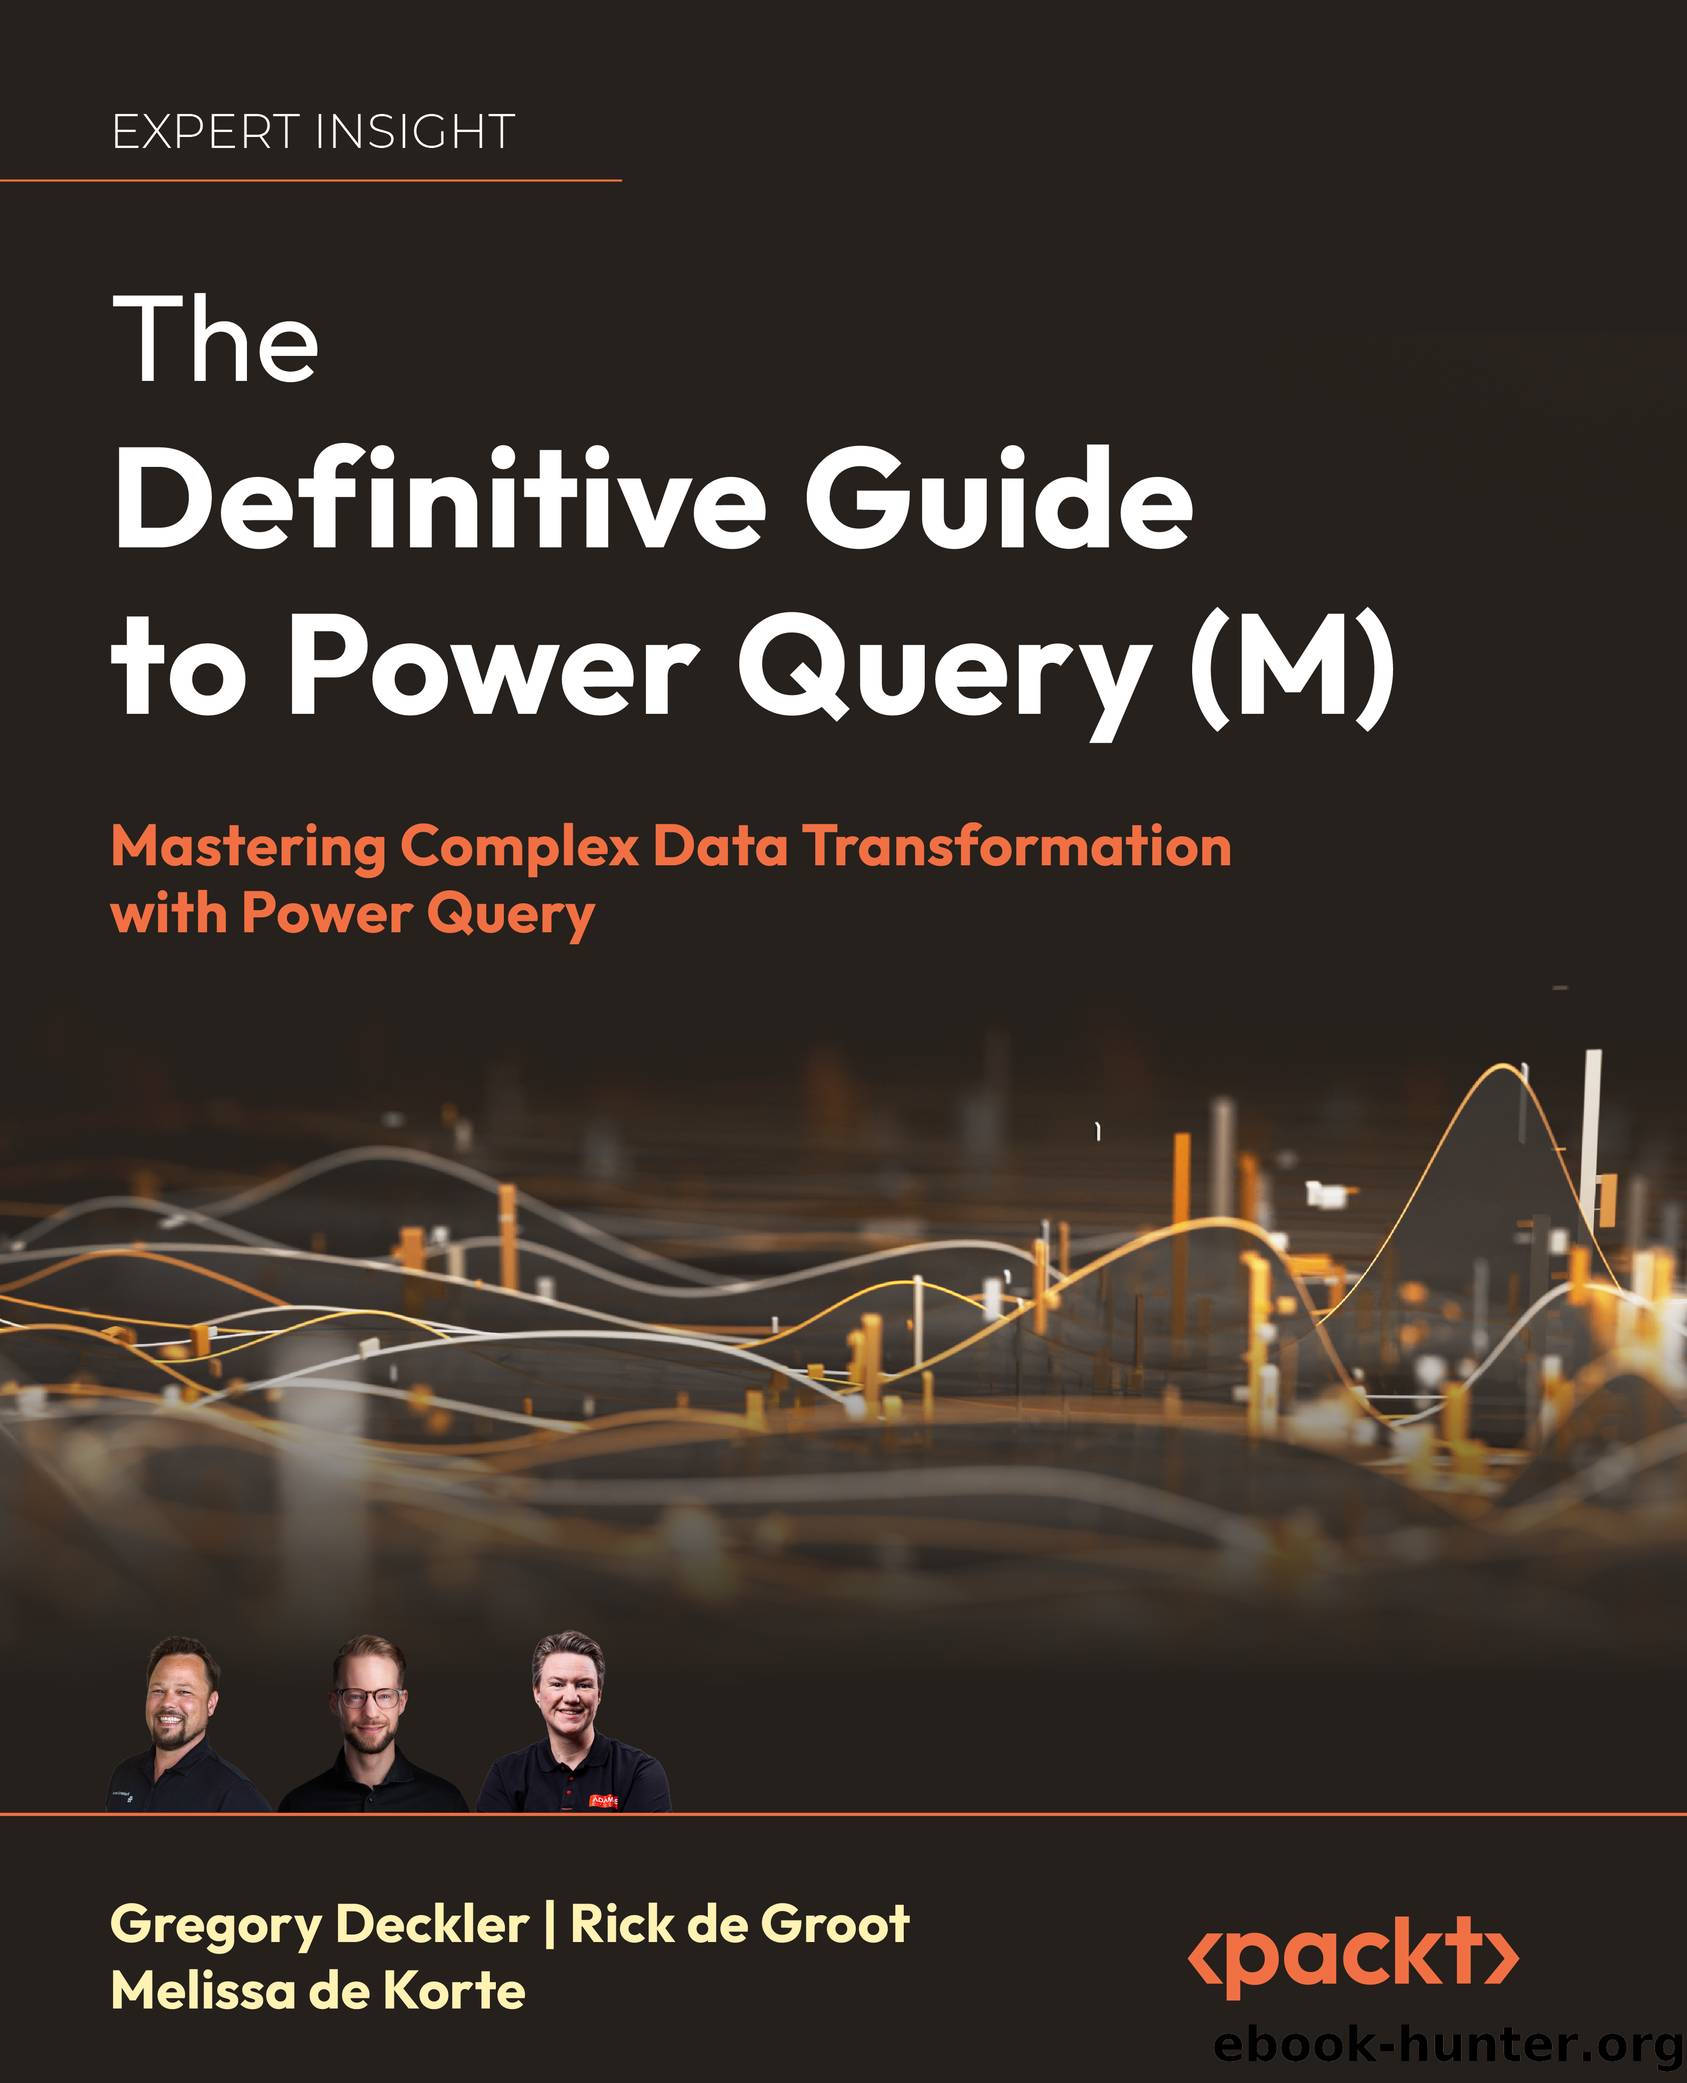 The Definitive Guide to Power Query (M) by Gregory Deckler Rick de Groot Melissa de Korte